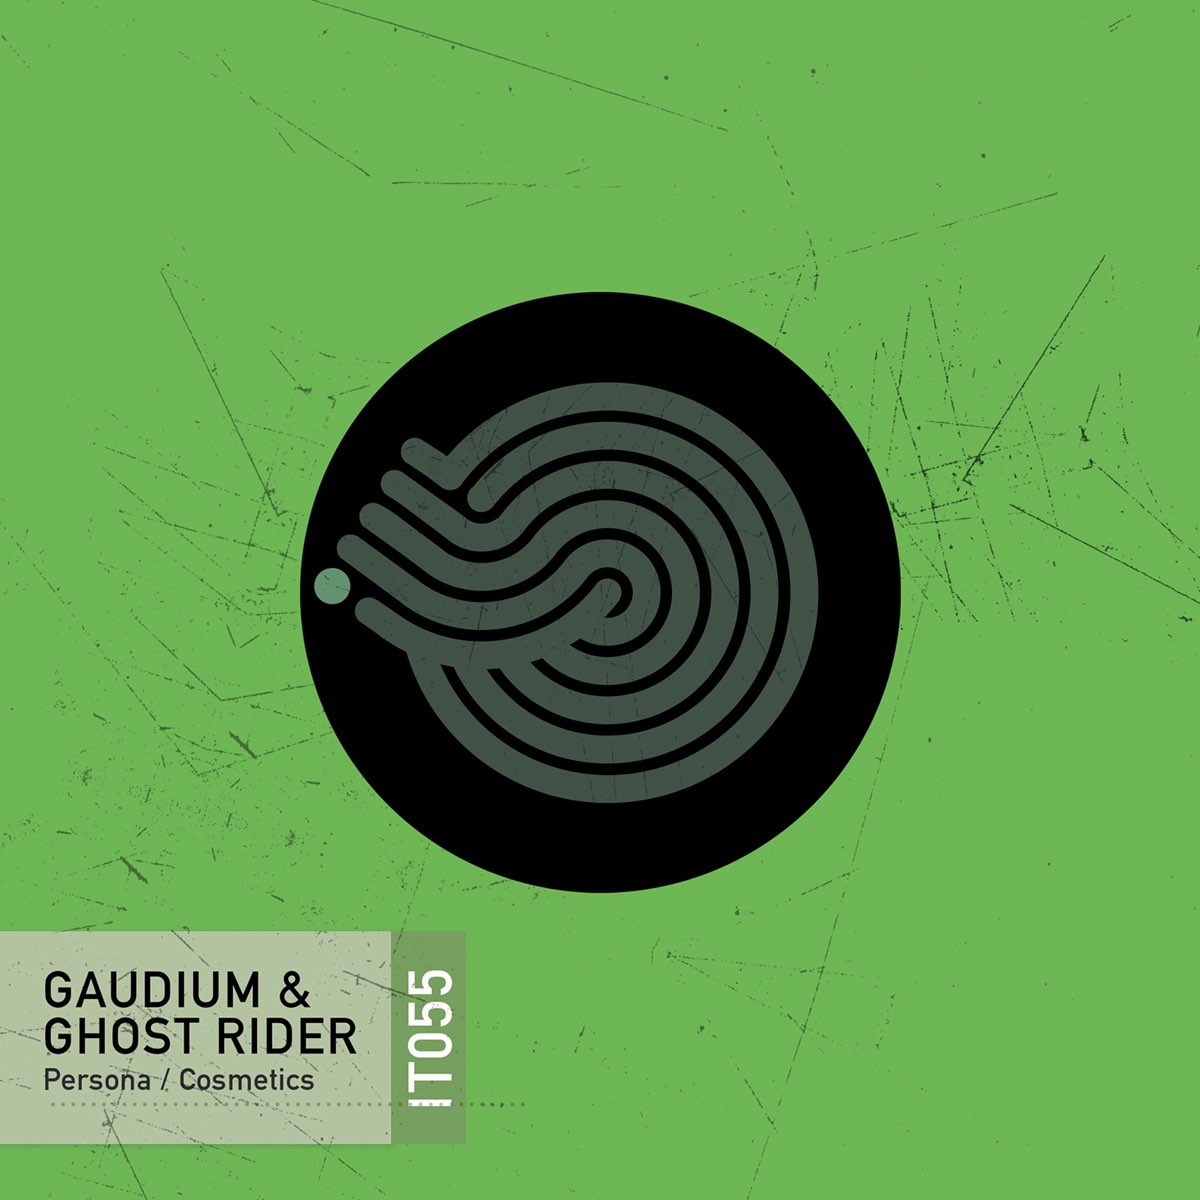 GAUDIUM - Session Of Progression (Iboga Records)